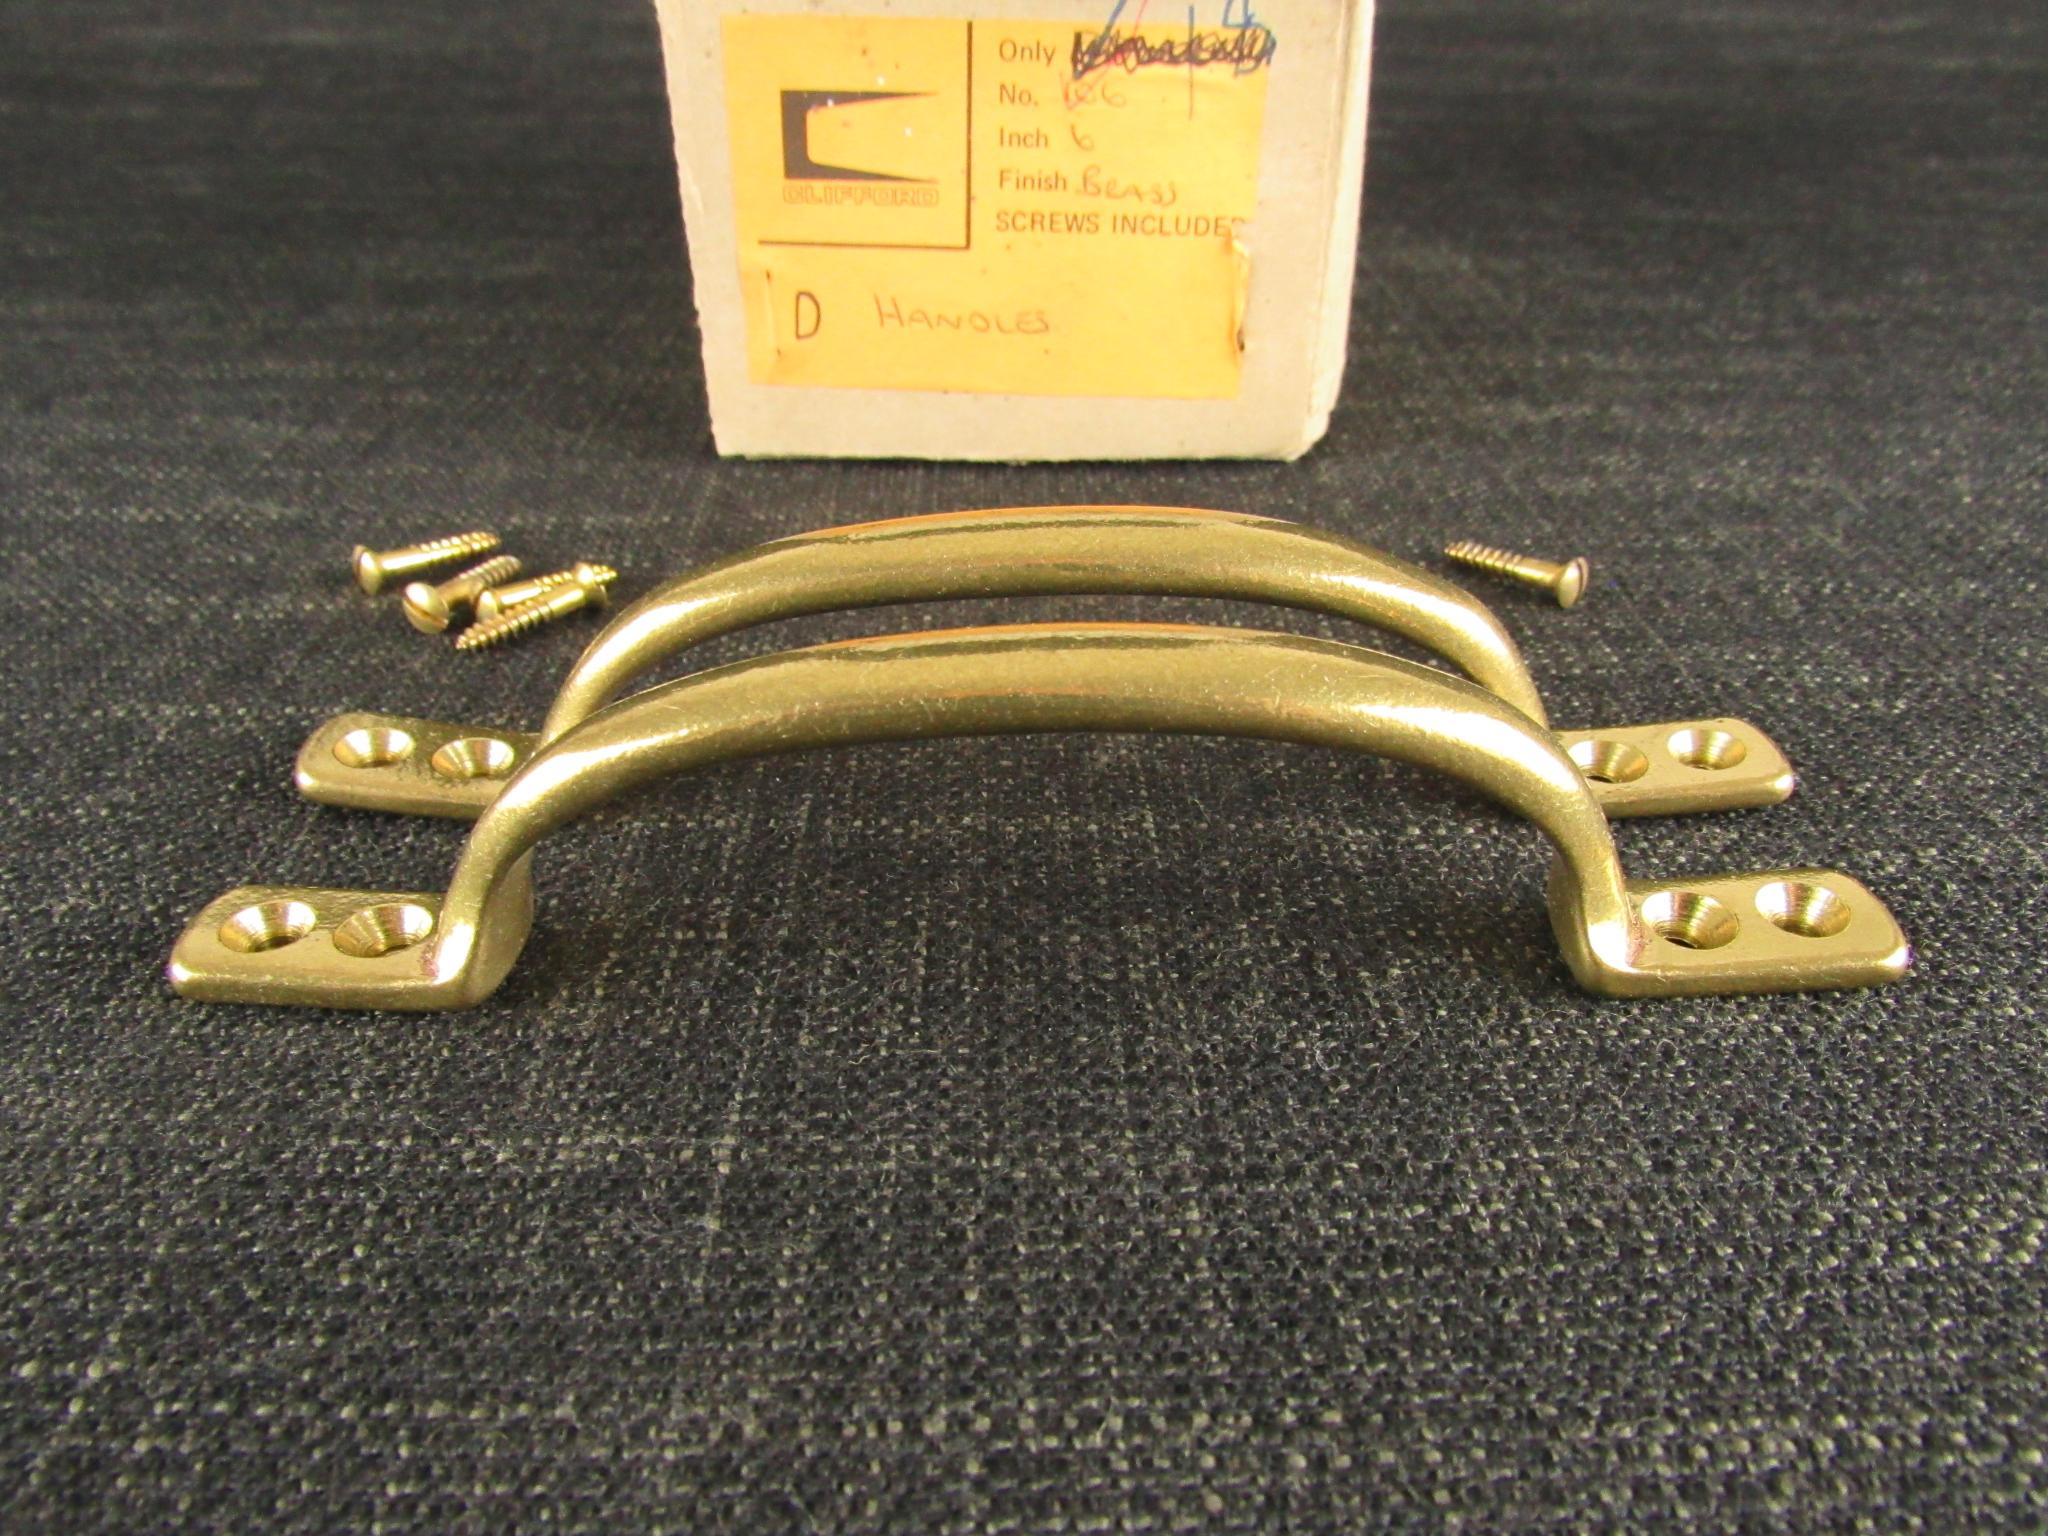 CLIFFORD Brass D Handles - 6 inch